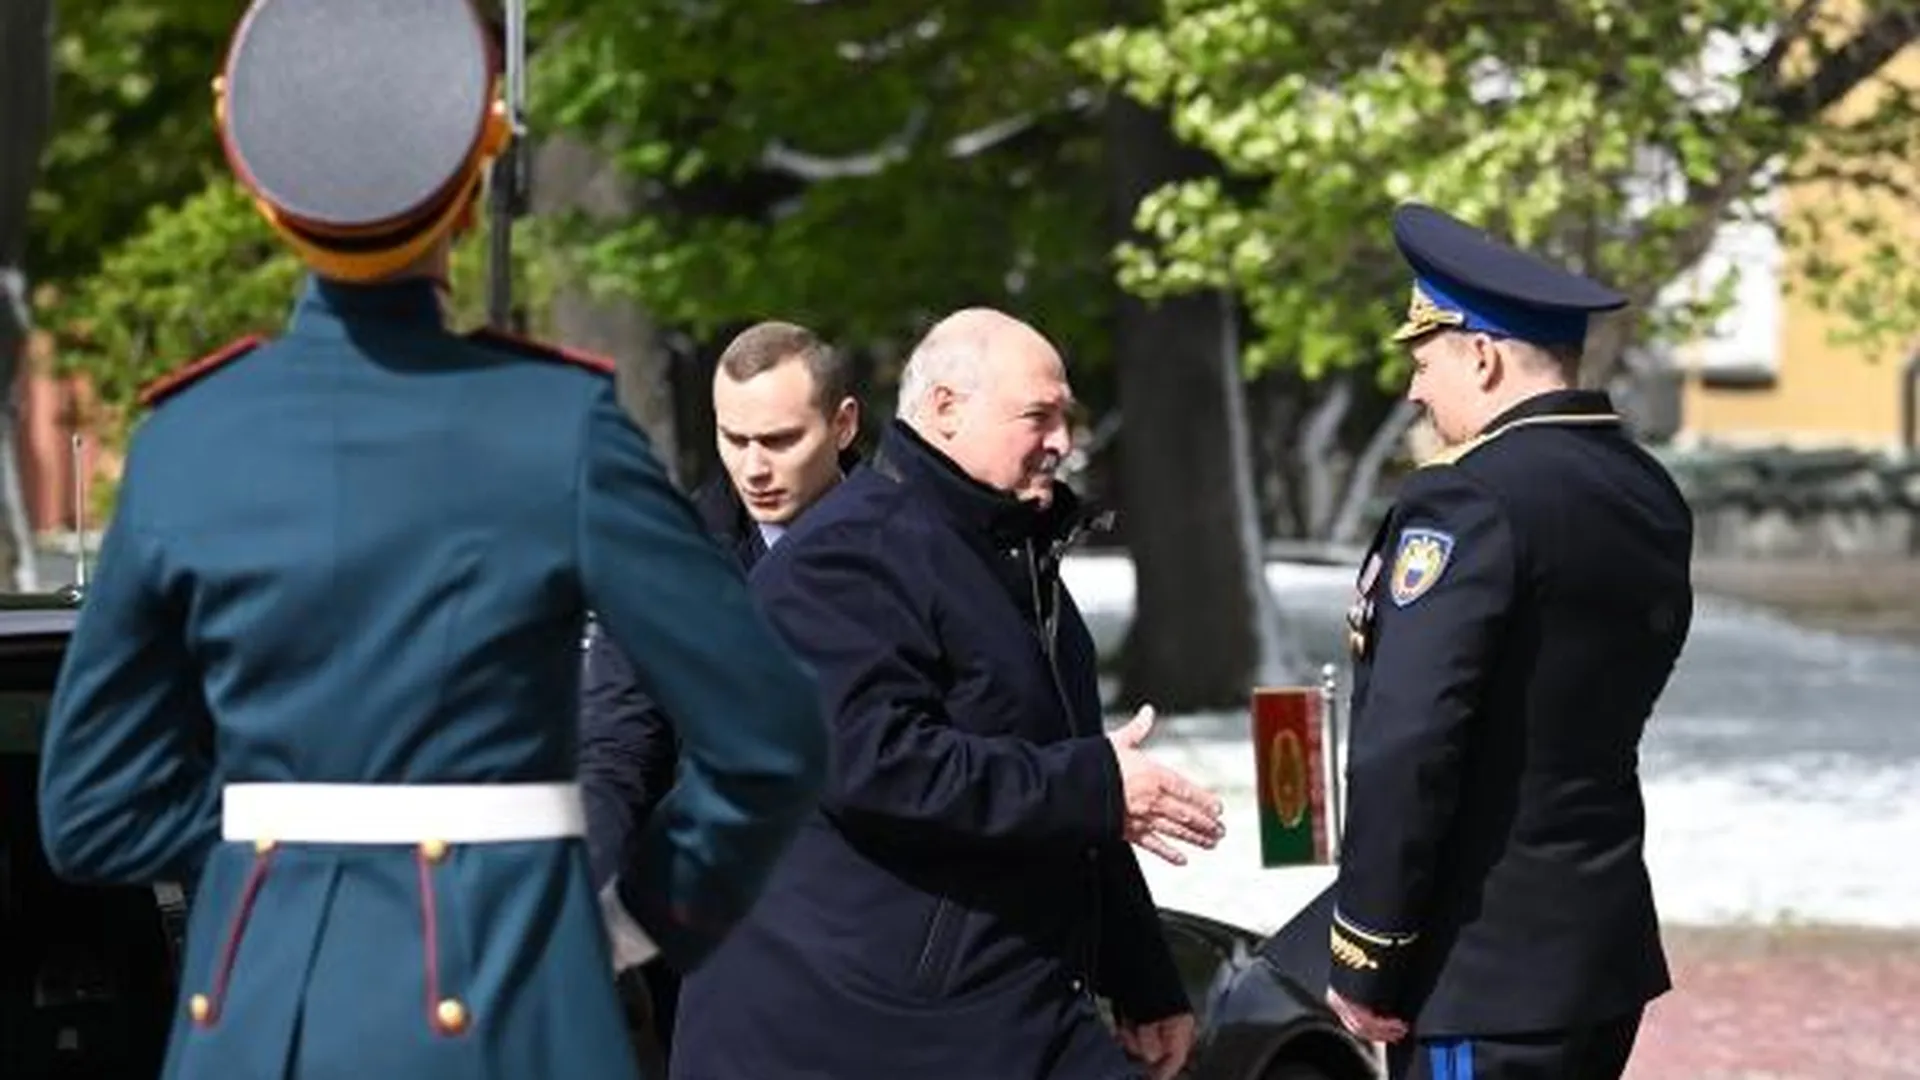 Лукашенко приехал на парад Победы со шпицем Умкой